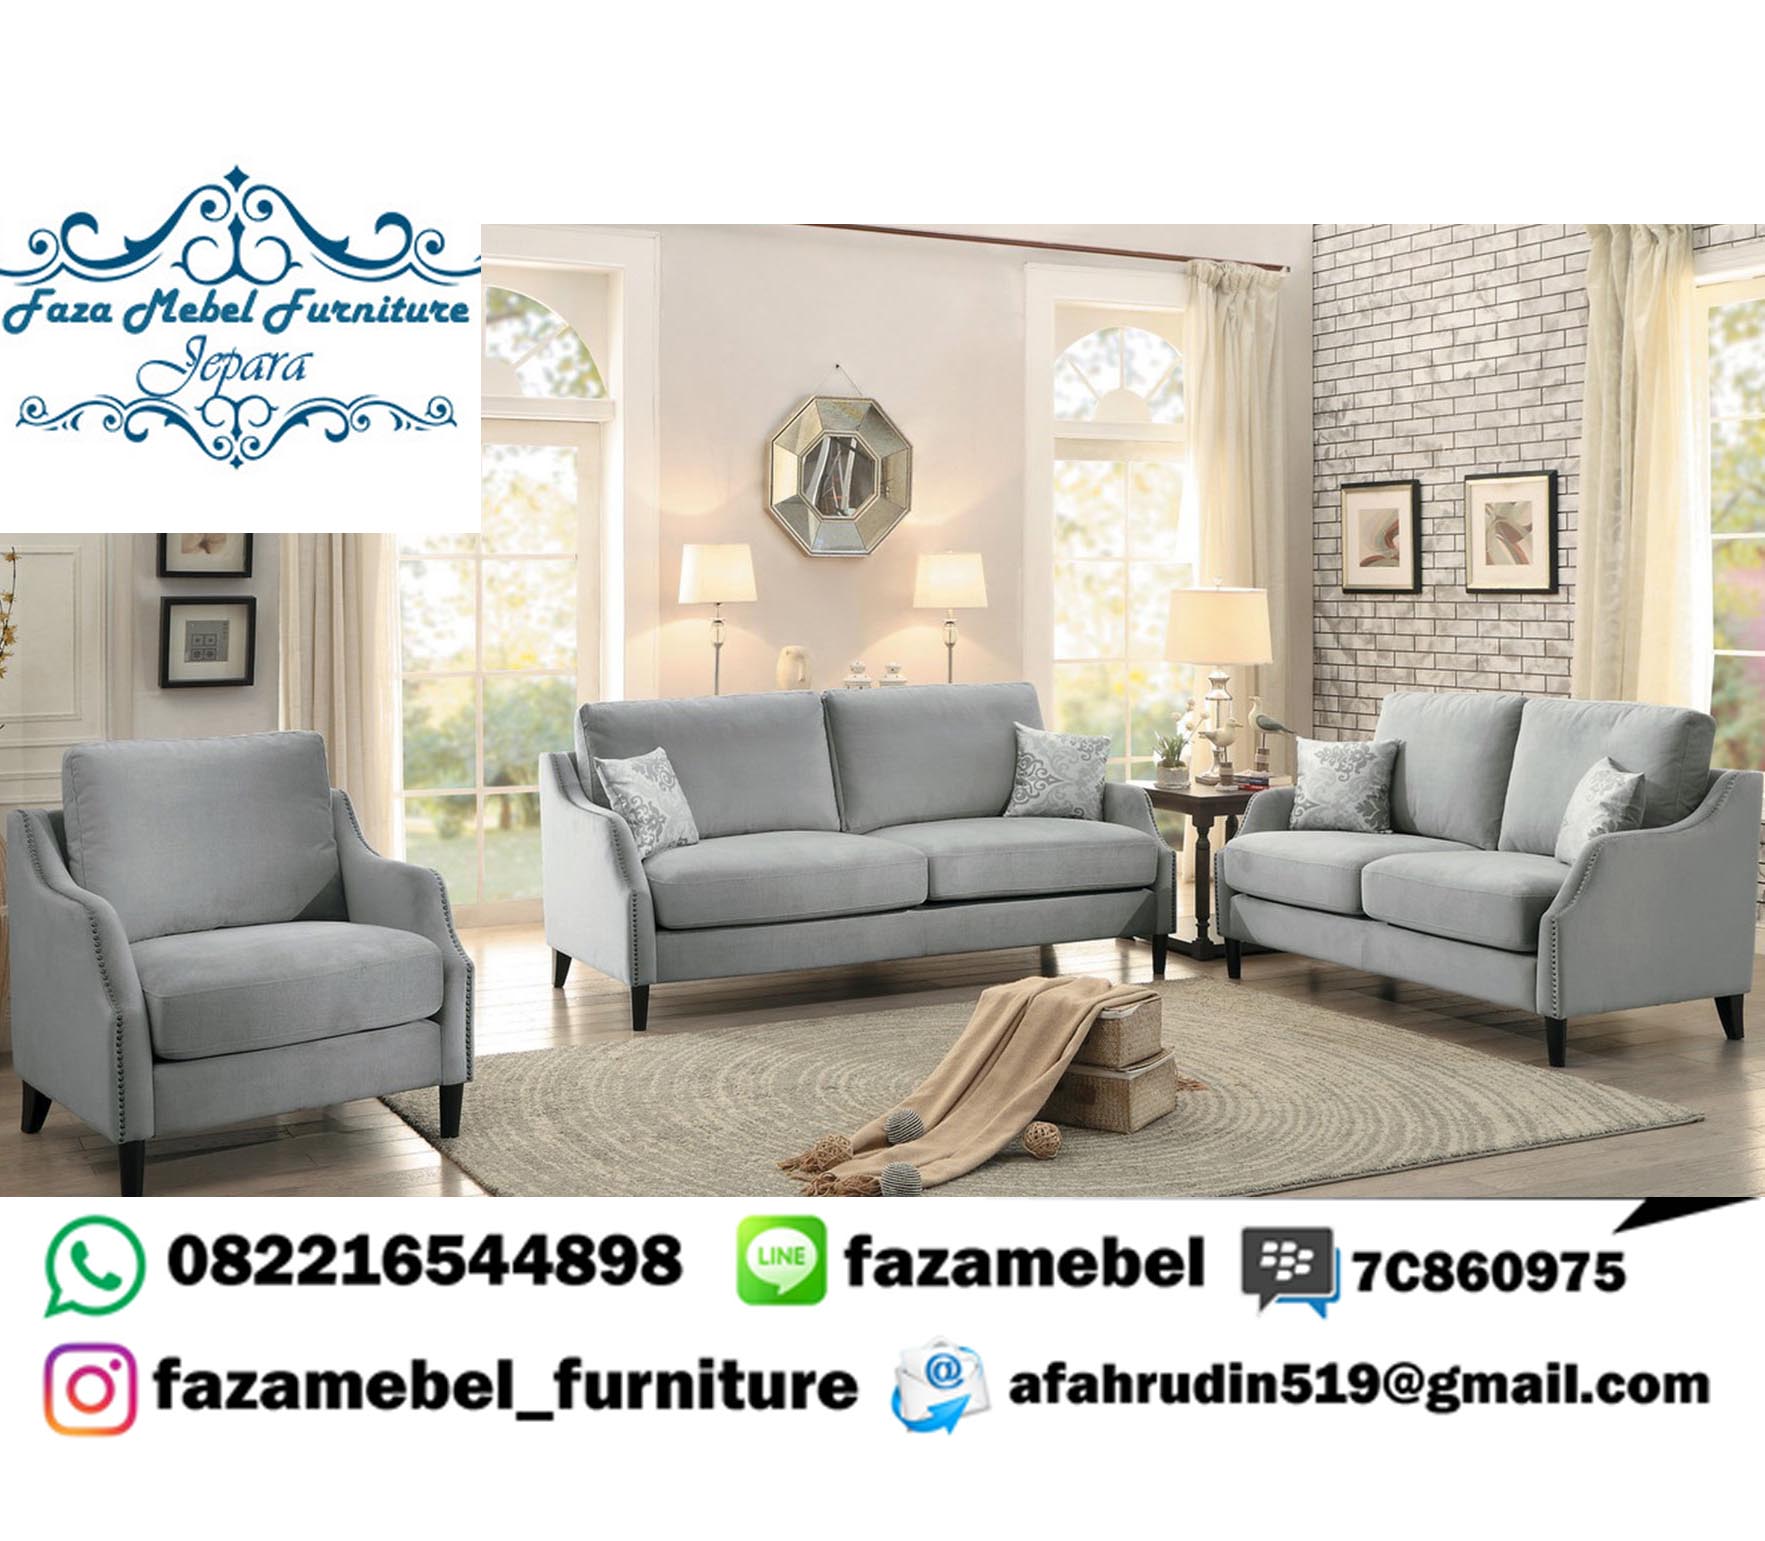 harga-sofa-tamu-minimalis-modern (3)